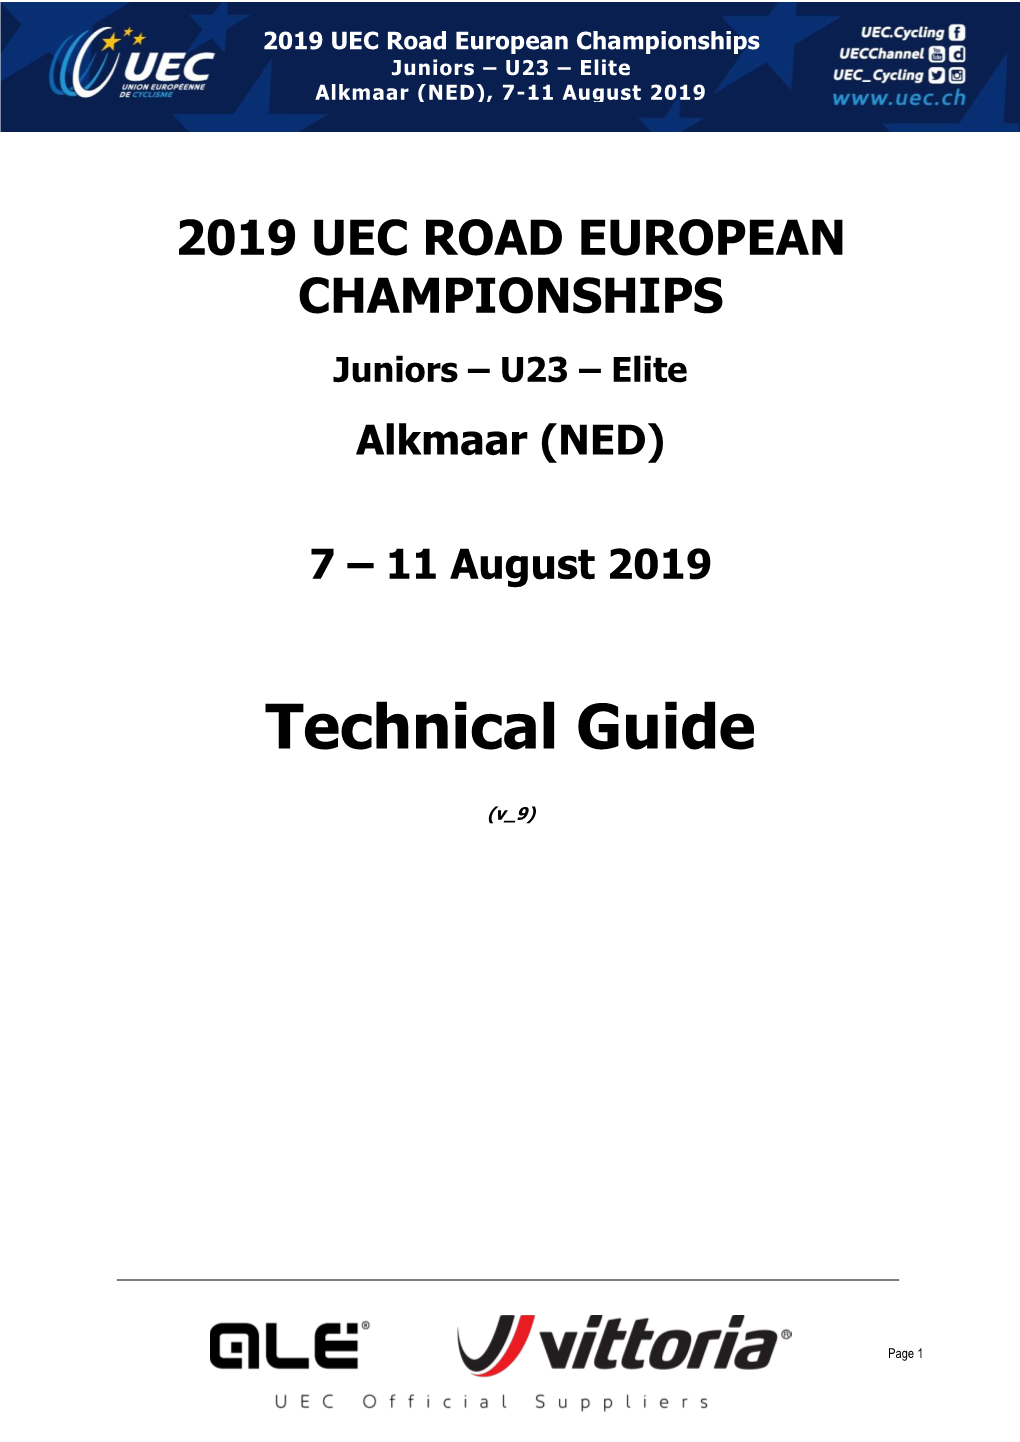 2019 UEC Road European Championships Juniors – U23 – Elite Alkmaar (NED), 7-11 August 2019